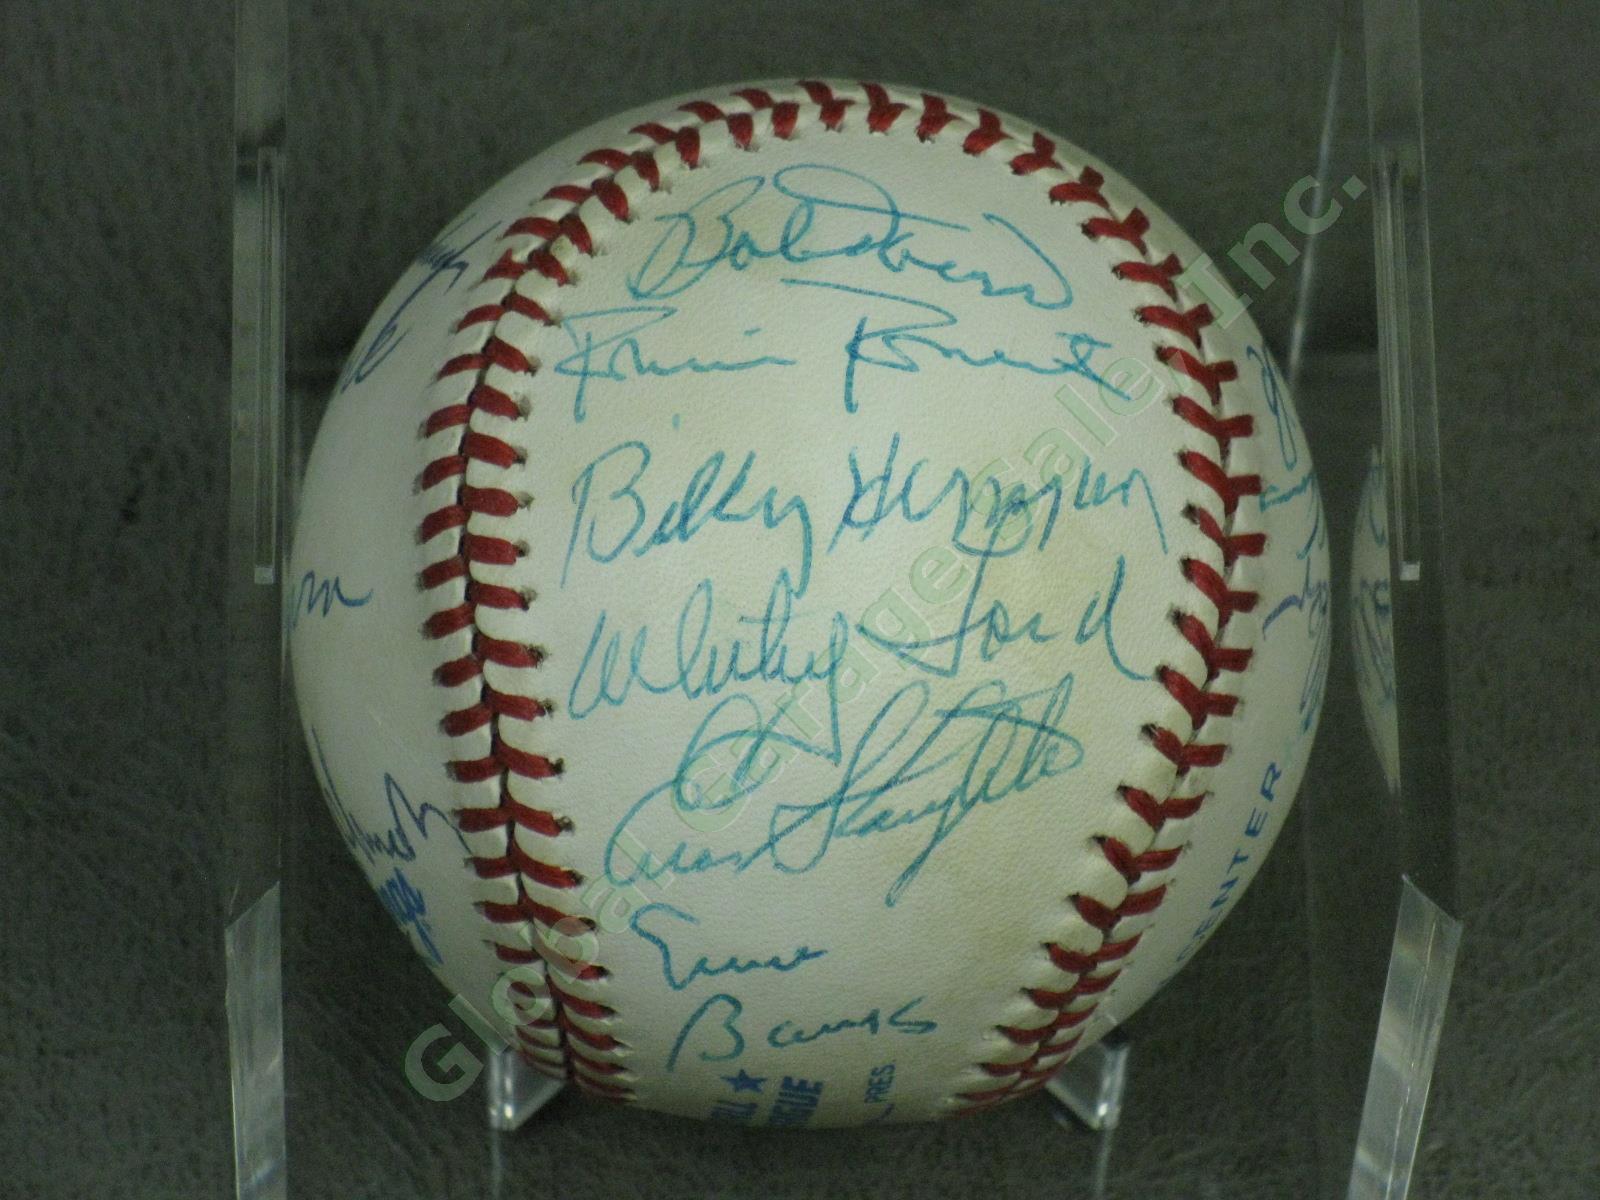 RARE Signed HOF Baseball 17 Autographs! Doerr Snider Ford Brock Robinson Banks + 3